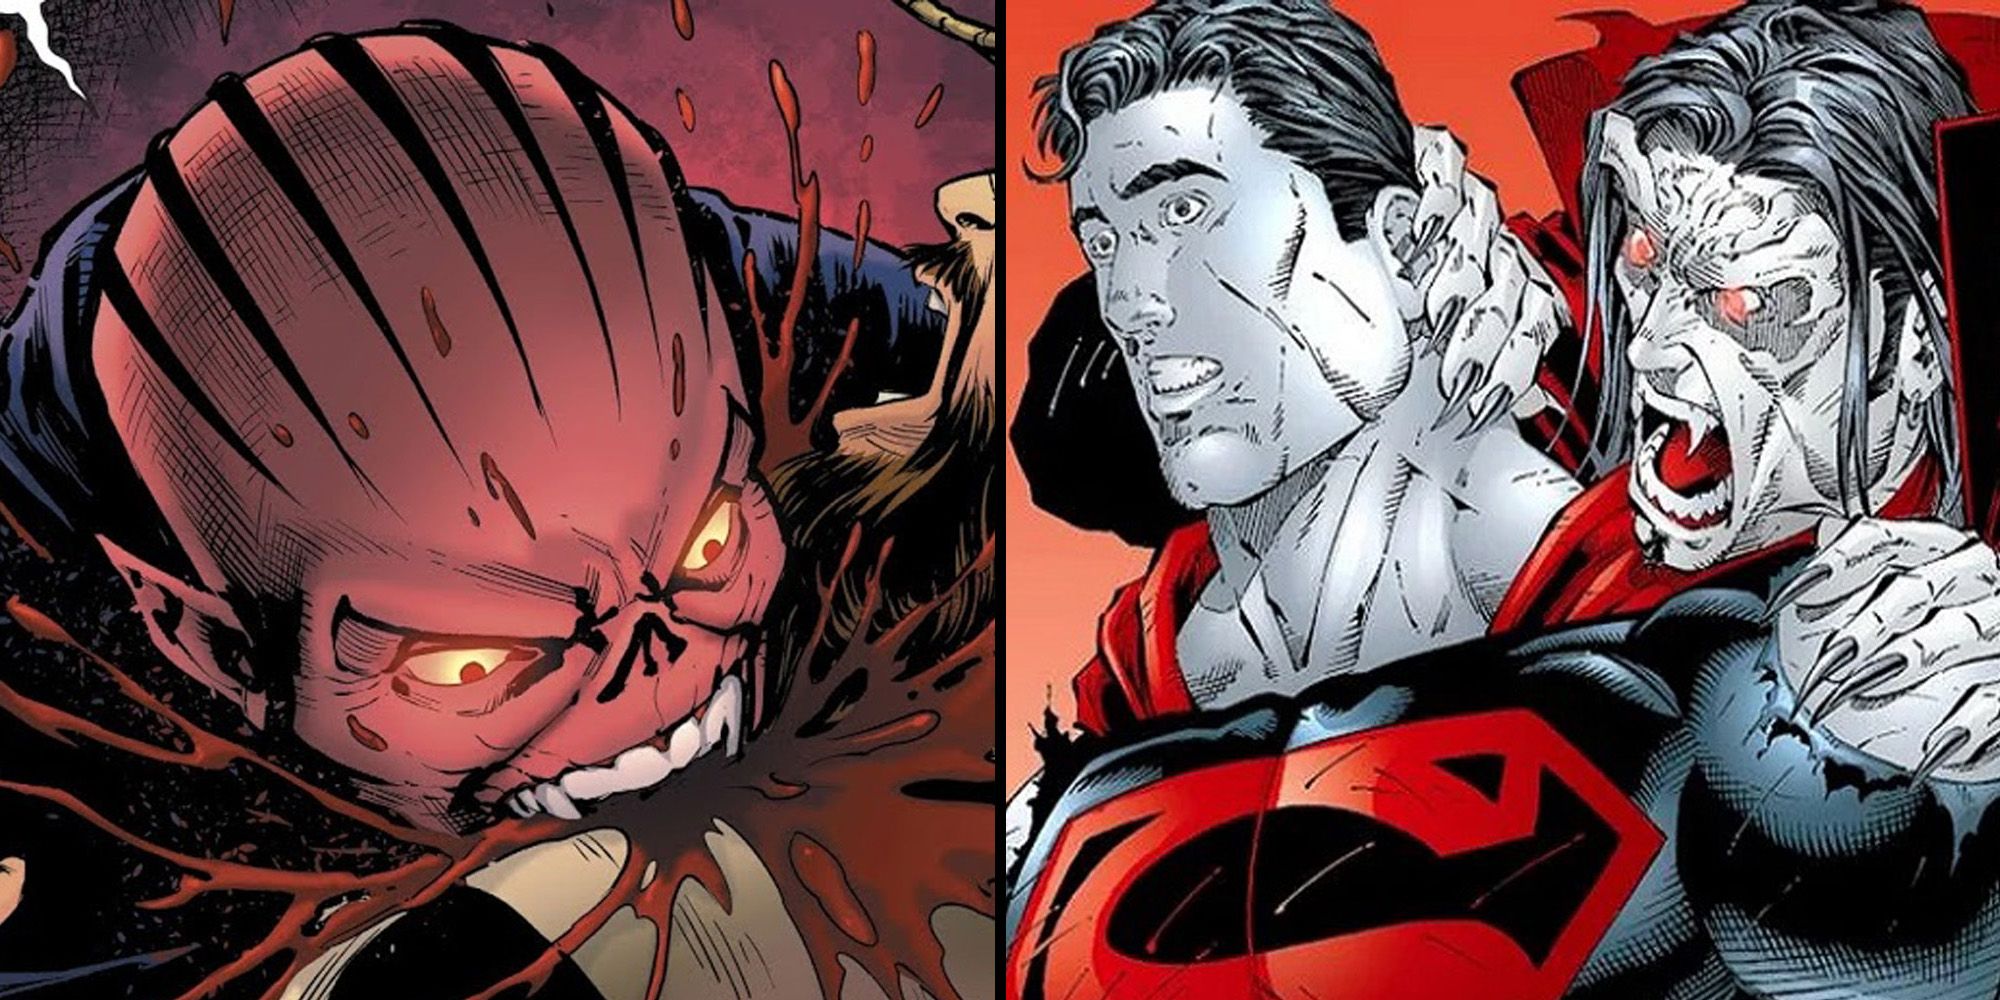 superman vs dracula comic